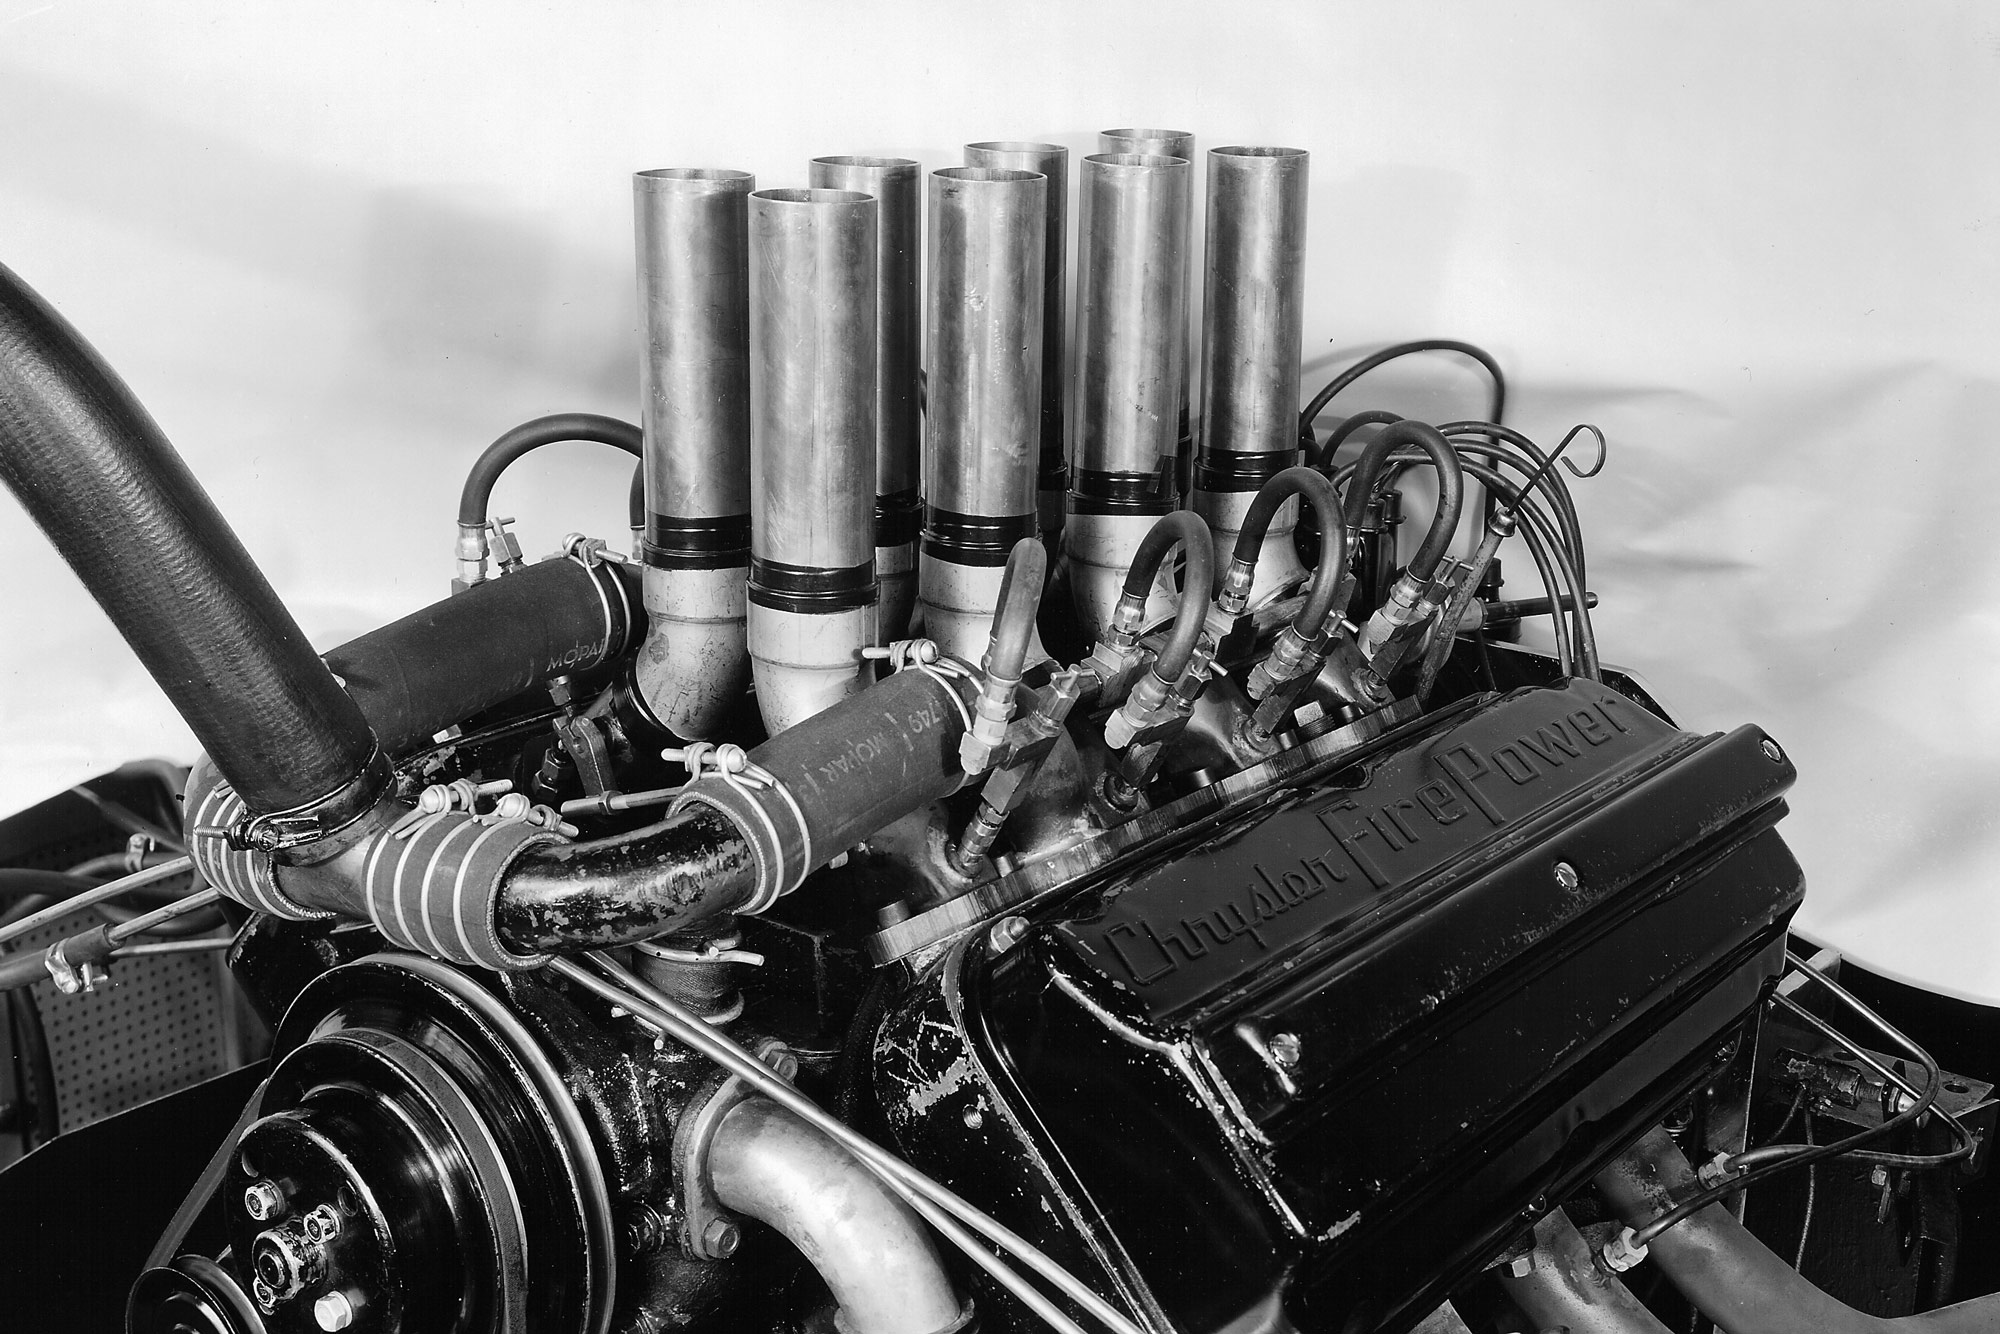 Chrysler FIrePower engine